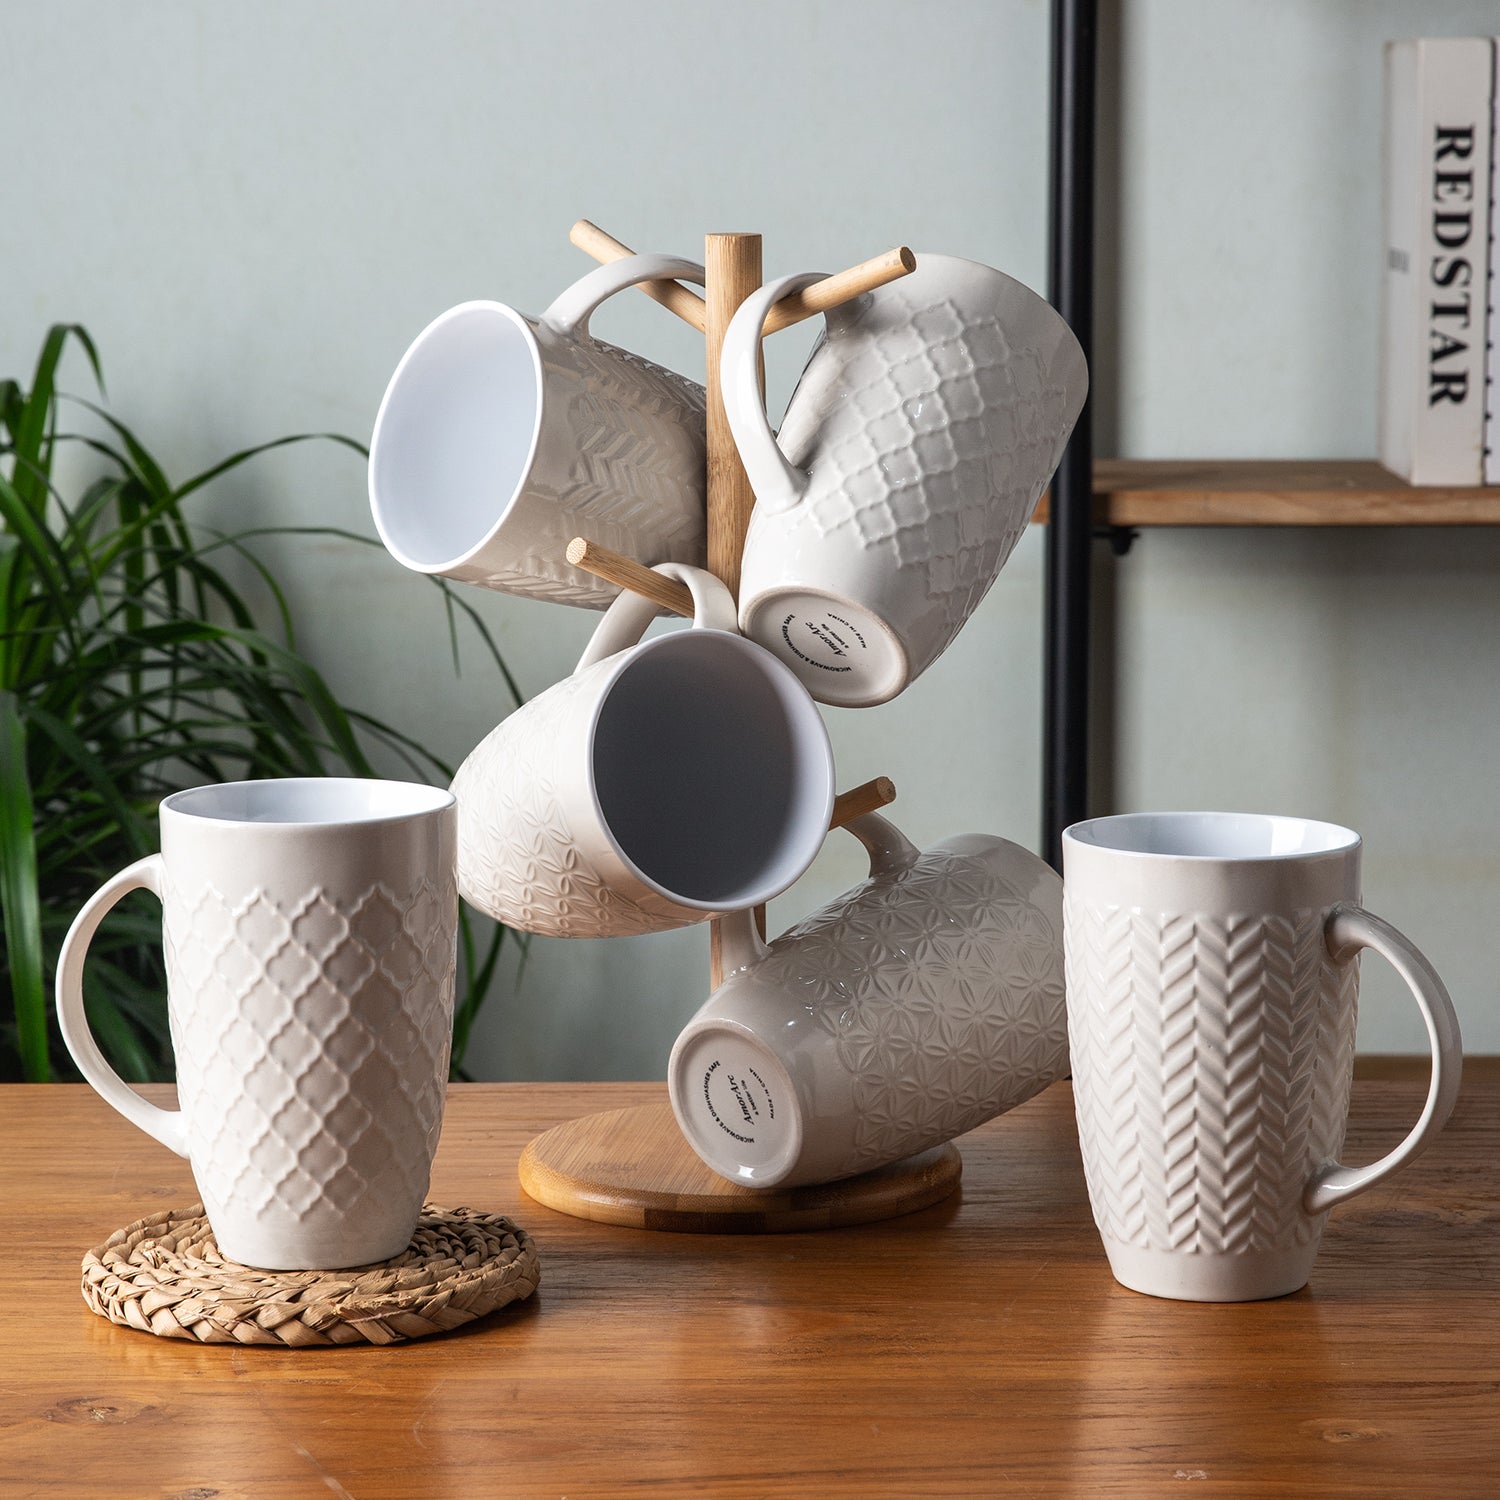 AmorArc Large Coffee Mugs Set of 6, 22oz Ceramic Tall Coffee Mugs Set with  Textured Geometric Patter…See more AmorArc Large Coffee Mugs Set of 6, 22oz